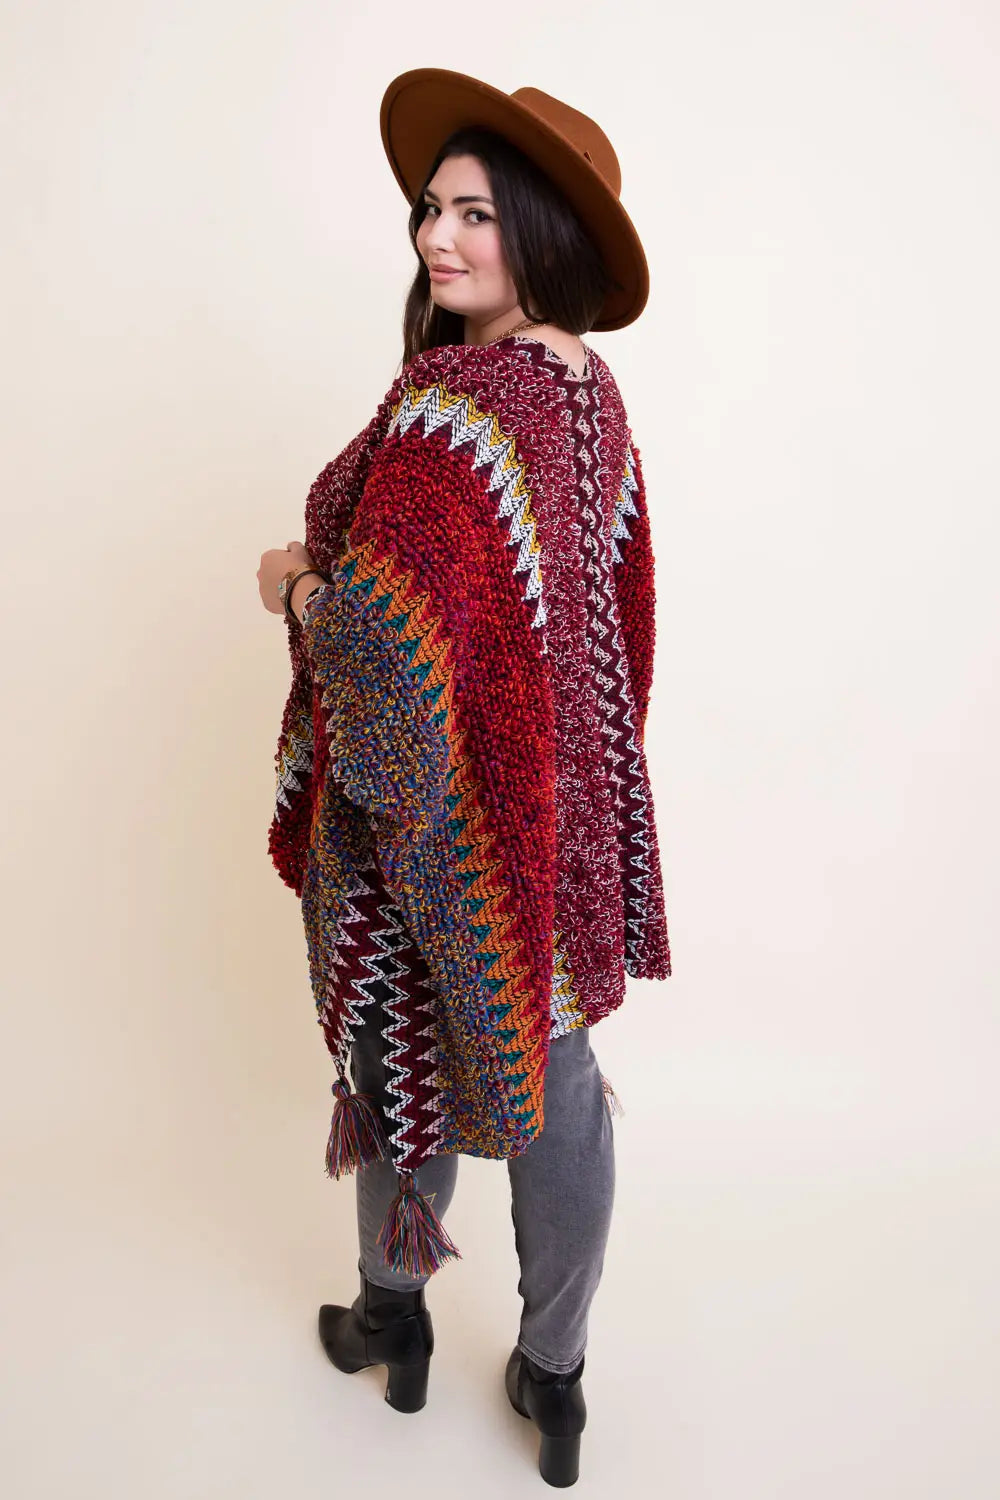 Colorful Crochet Pattern ~ Poncho